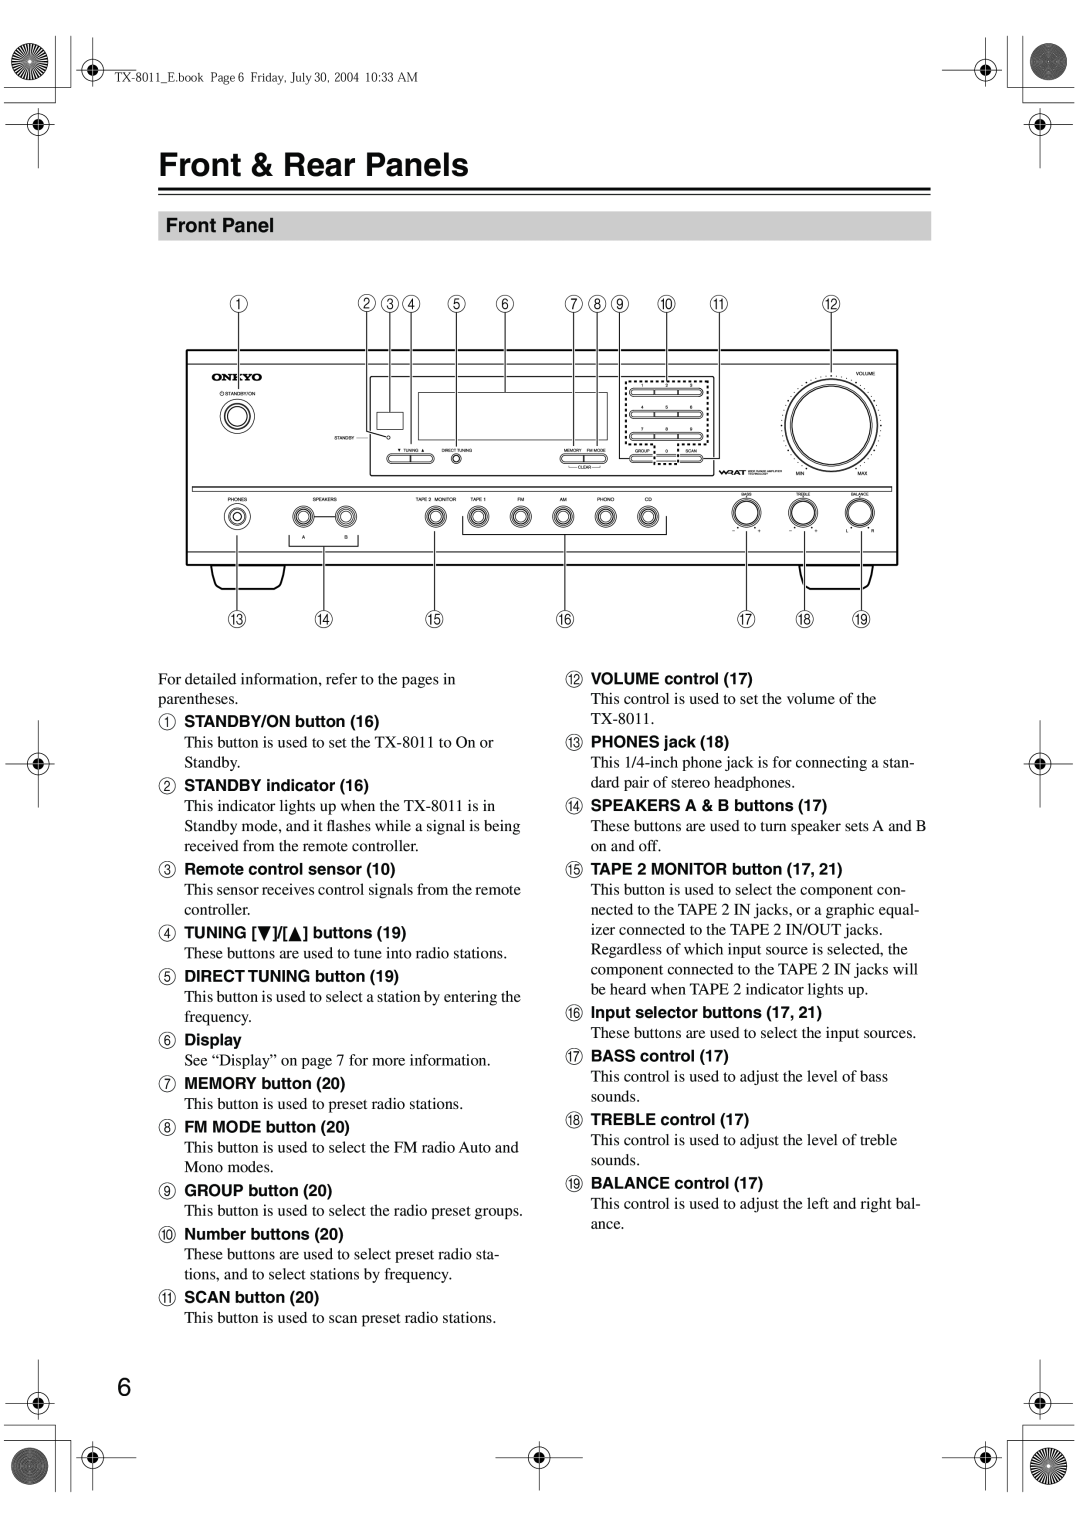 Onkyo TX-8011 instruction manual Front & Rear Panels, Front Panel, 2 34 5 6 78 9 J K, M N O P Q R S 